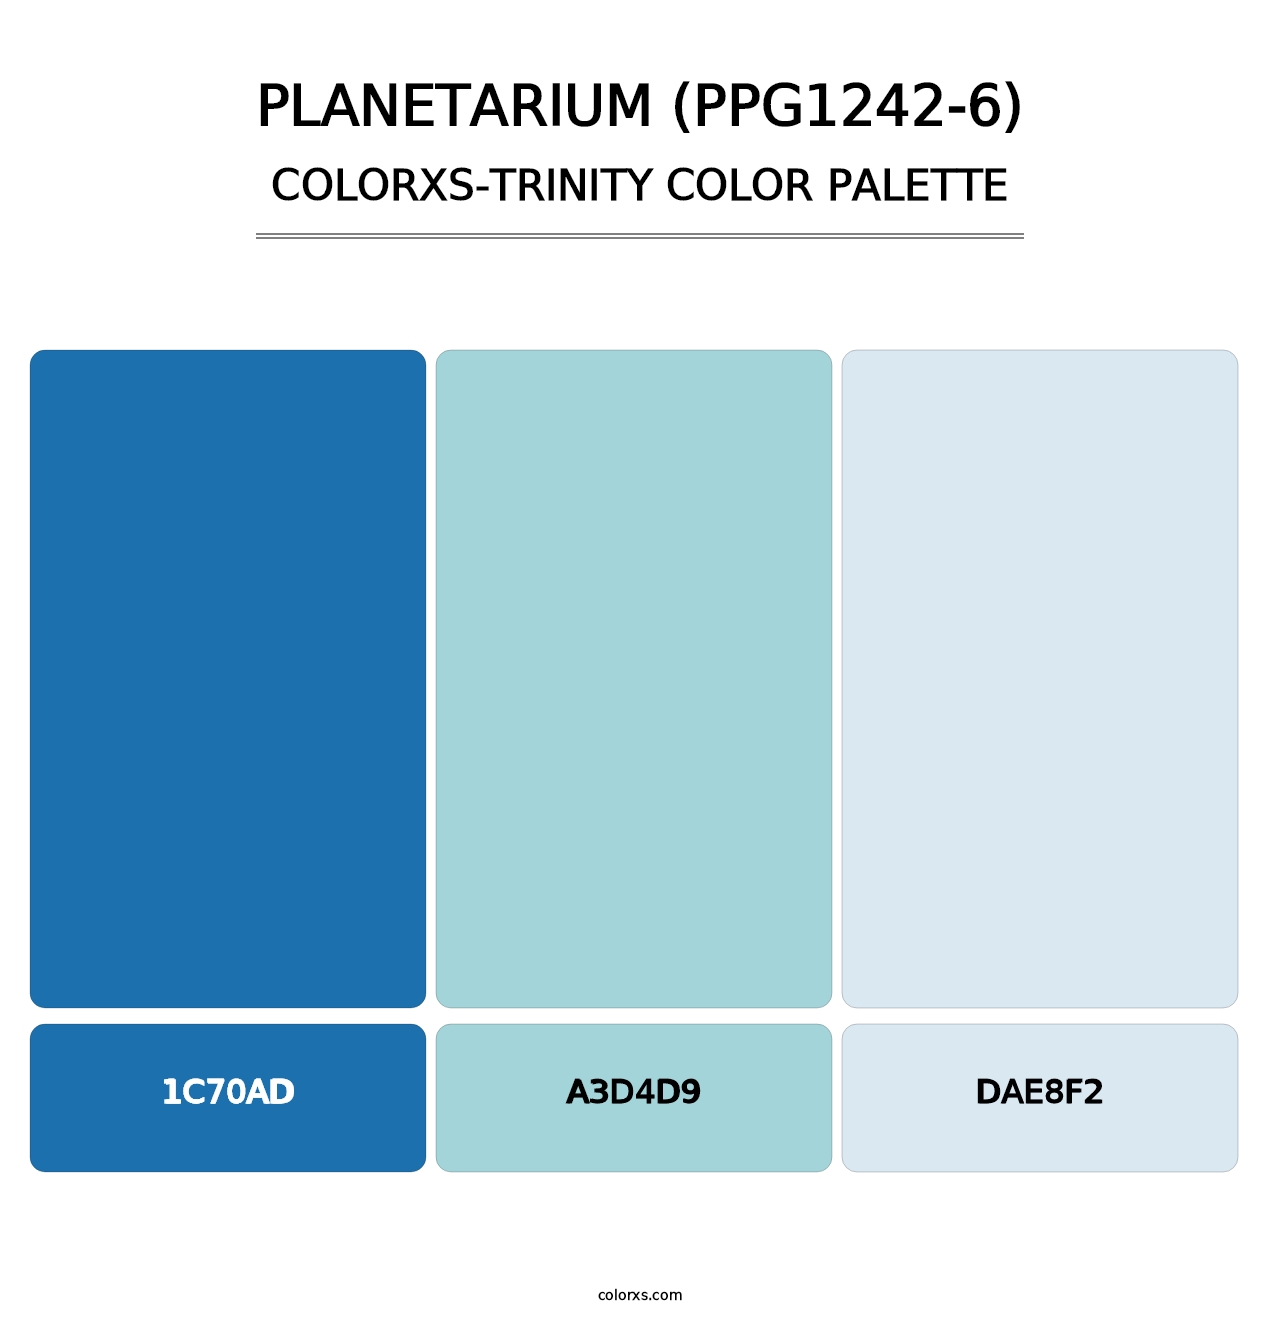 Planetarium (PPG1242-6) - Colorxs Trinity Palette